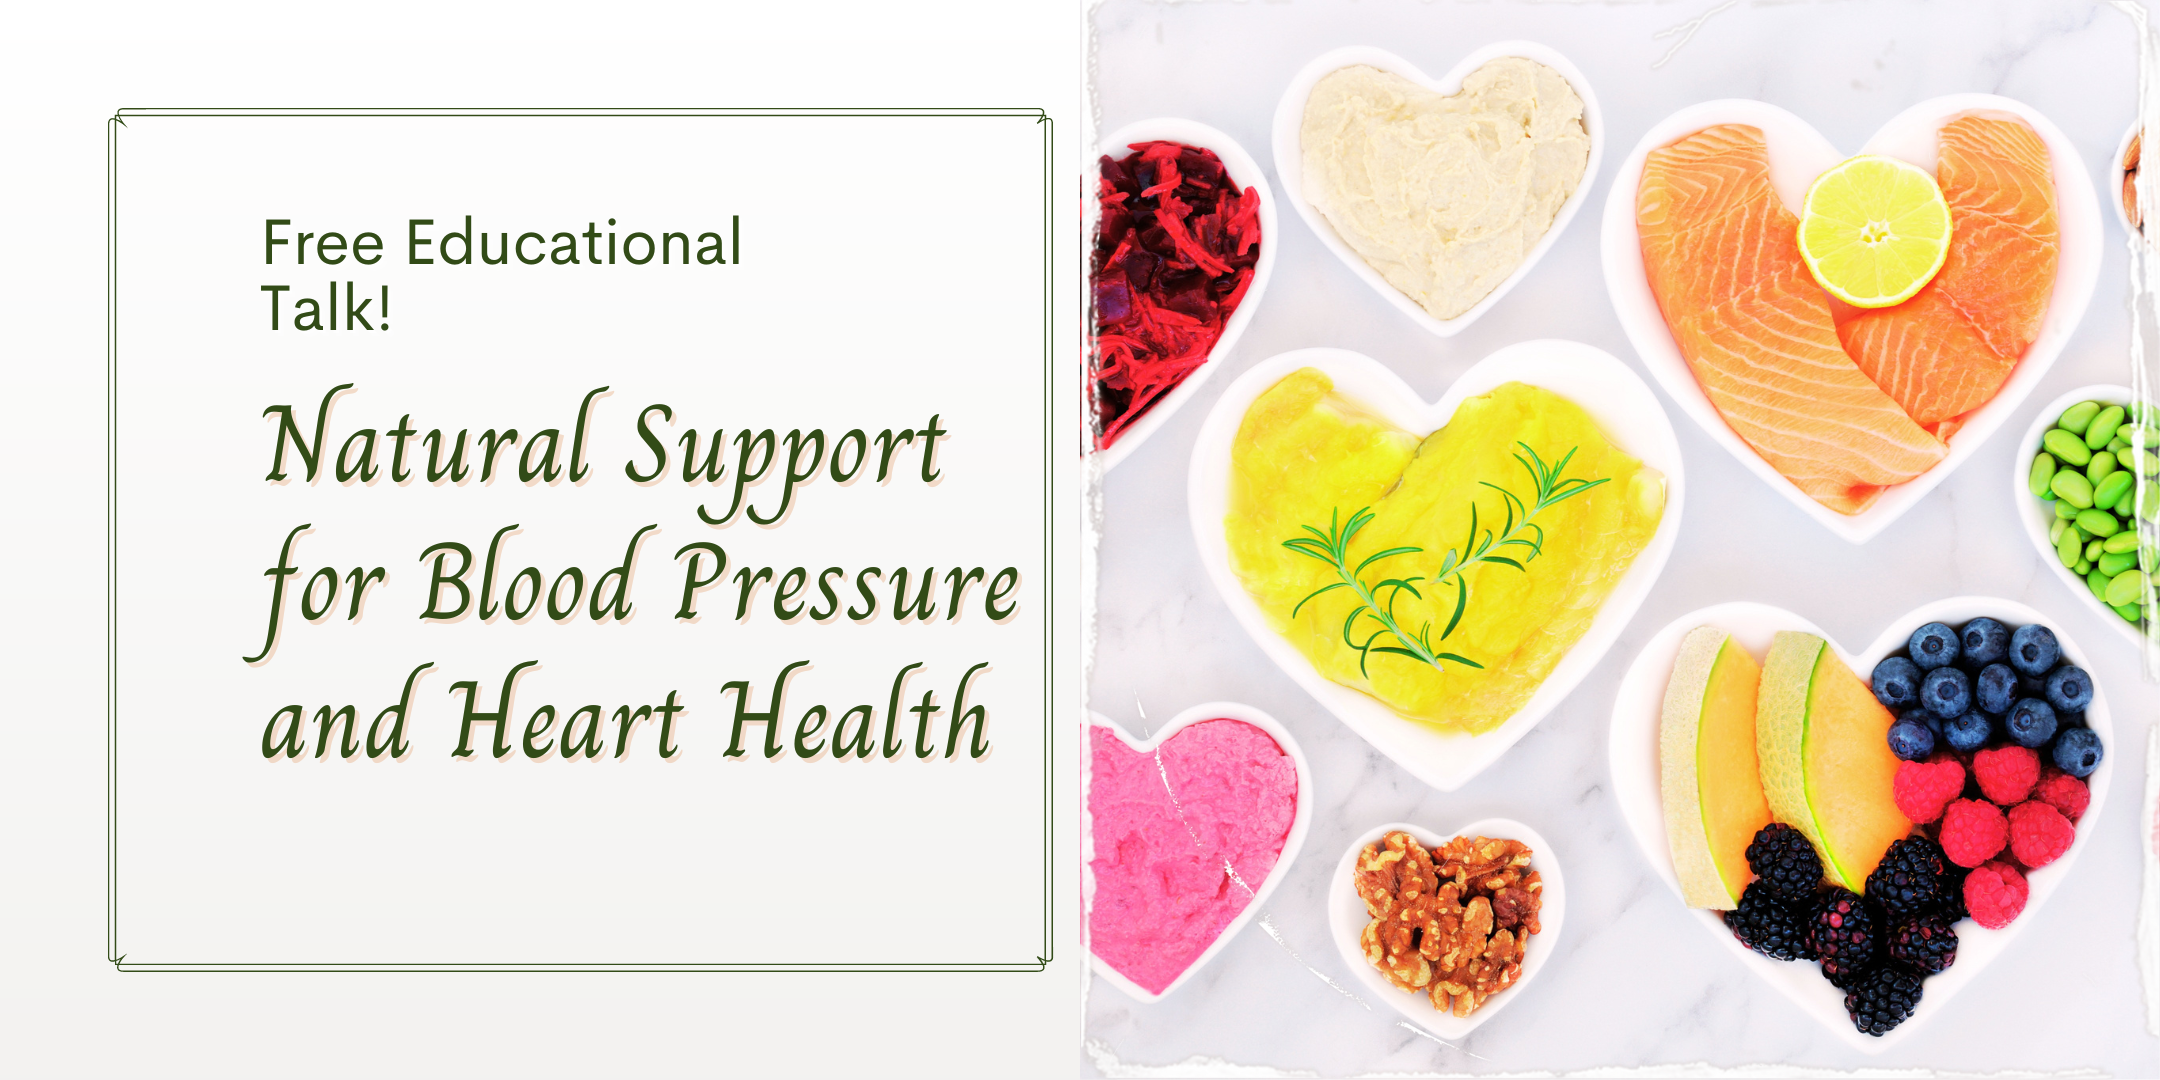 Natural Support for Blood Pressure